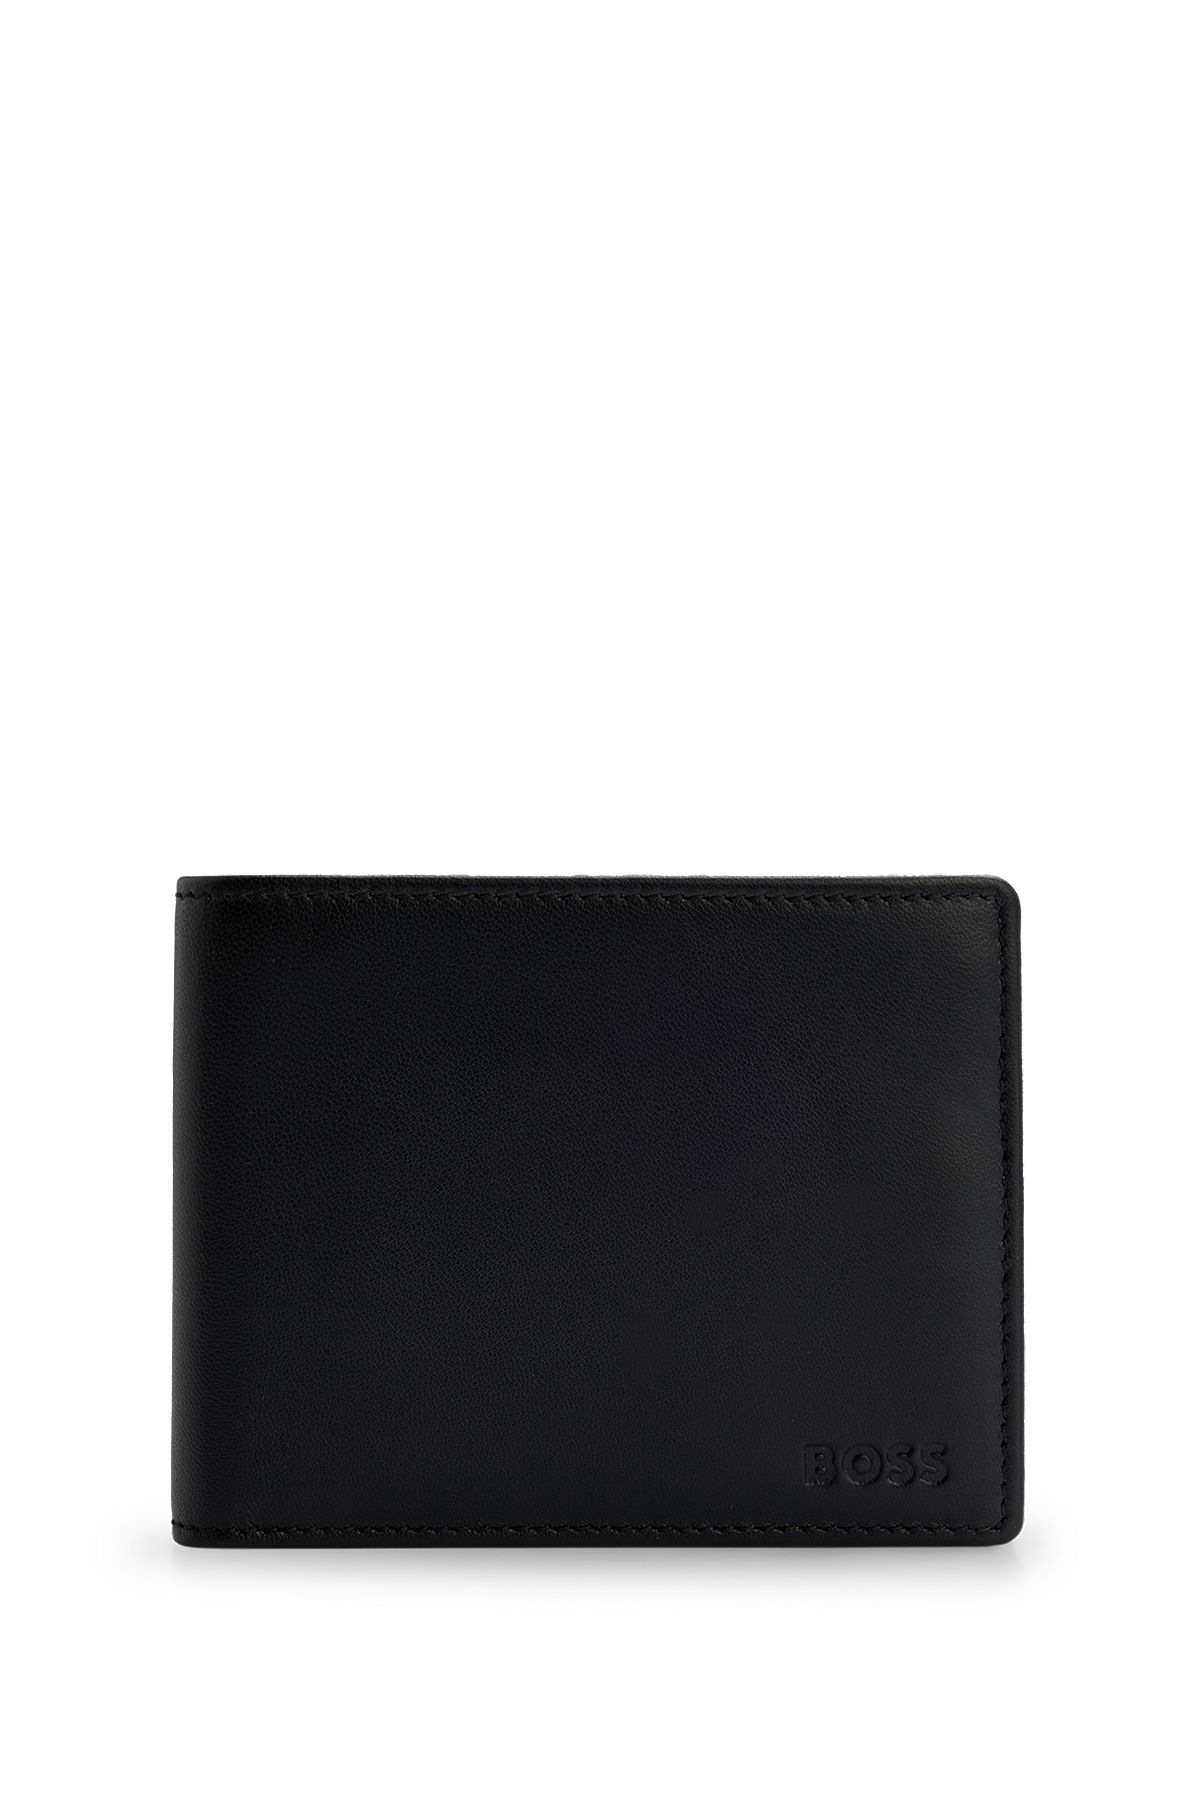 PU Leather Men Wallets Premium Product Wallets for Man Short Black Walet Portefeuille  Homme